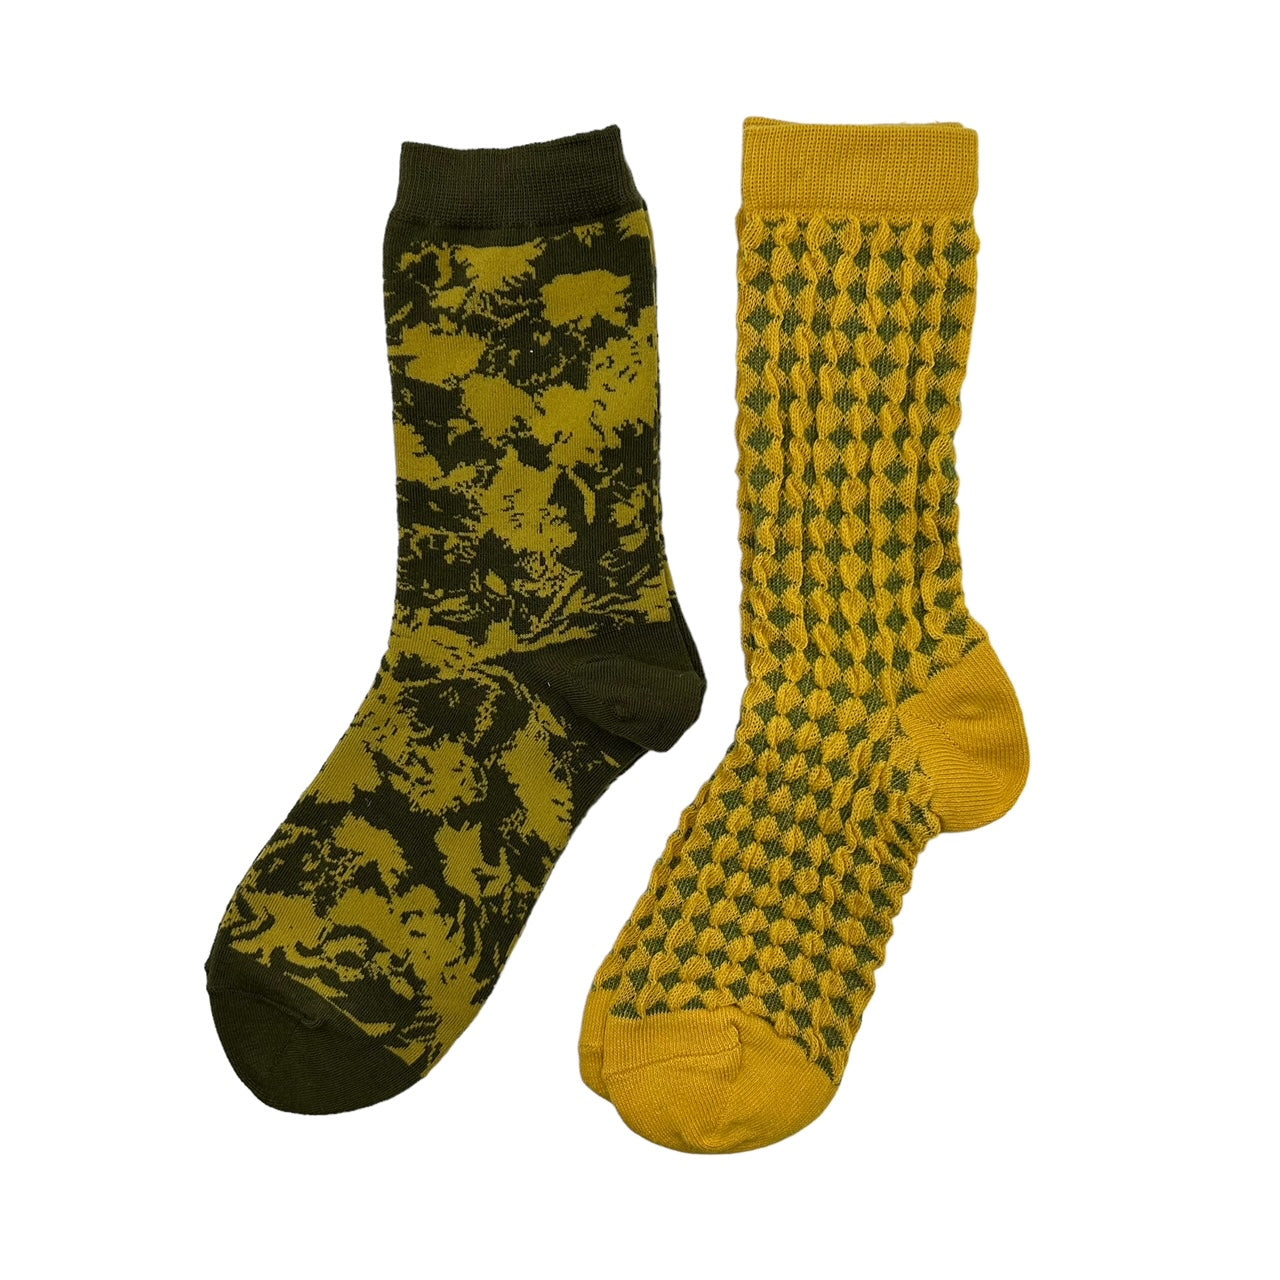 Green & yellow mix duo sock box